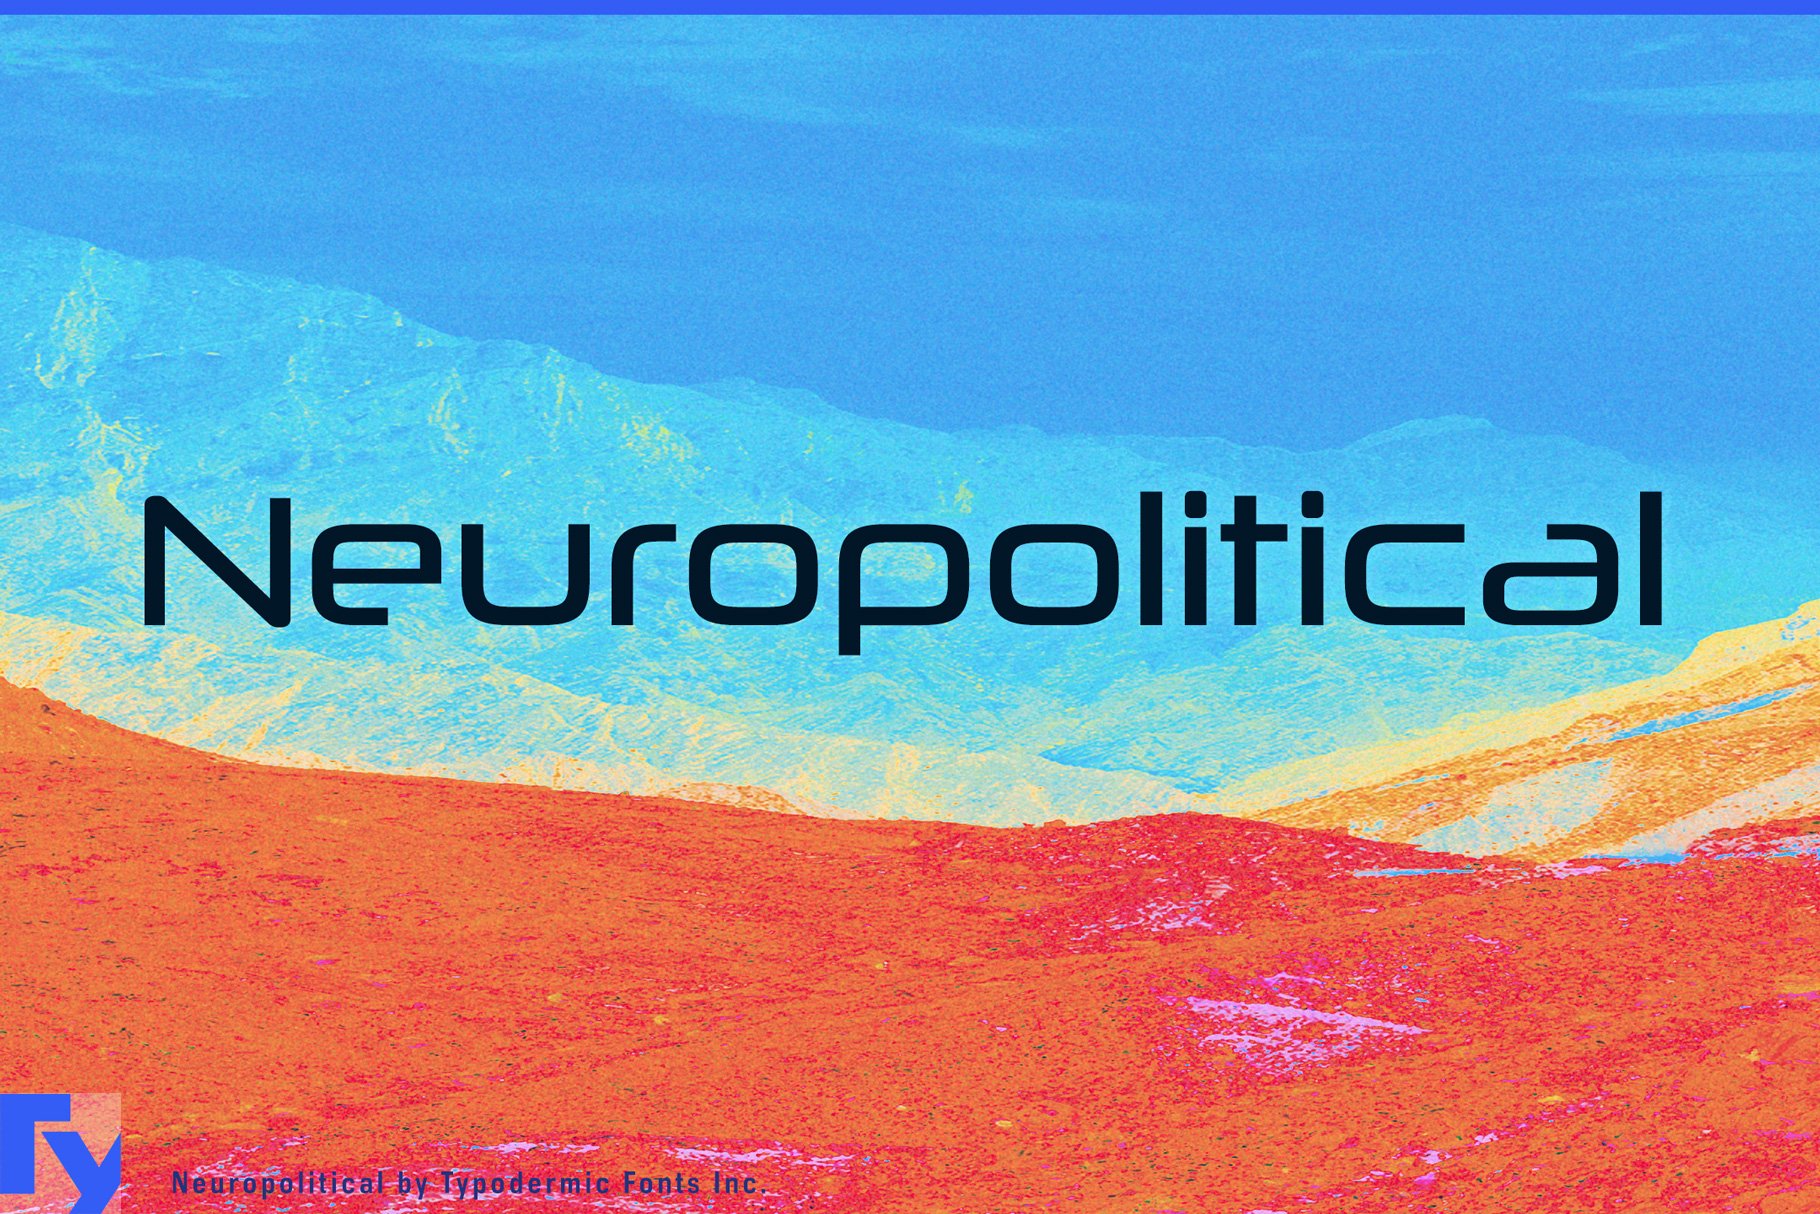 Neuropolitical cover image.